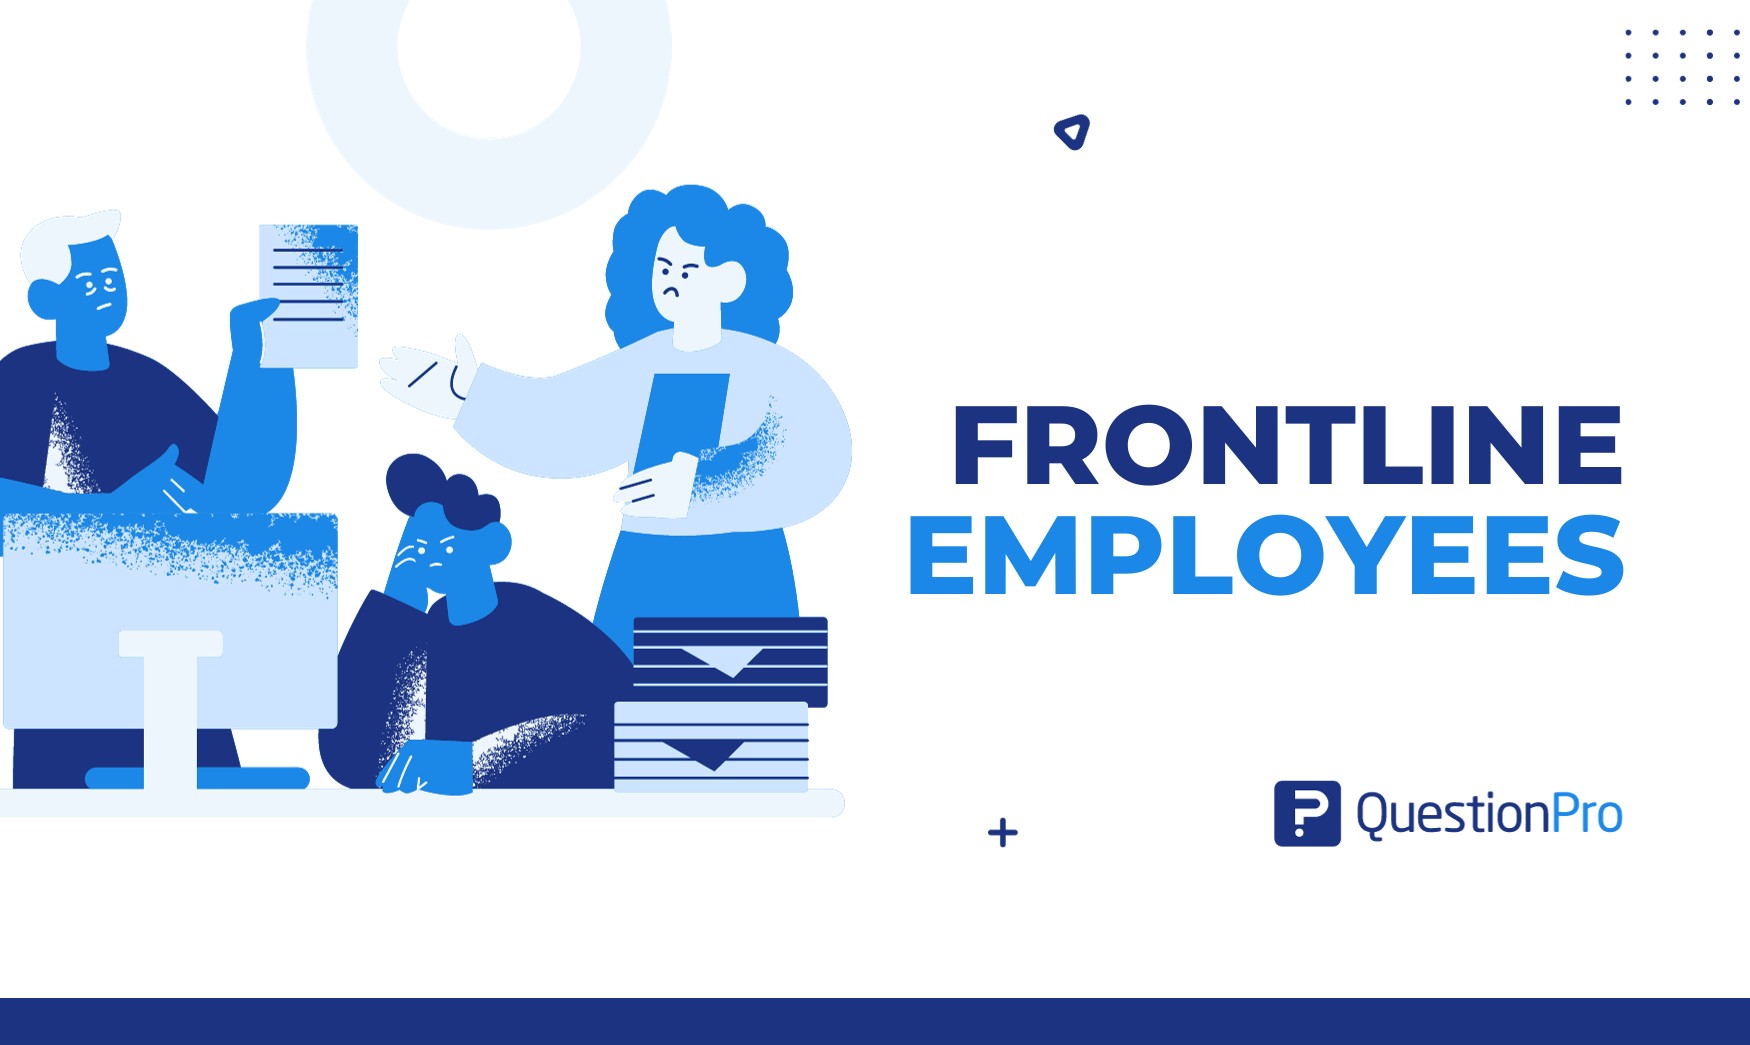 frontline employees